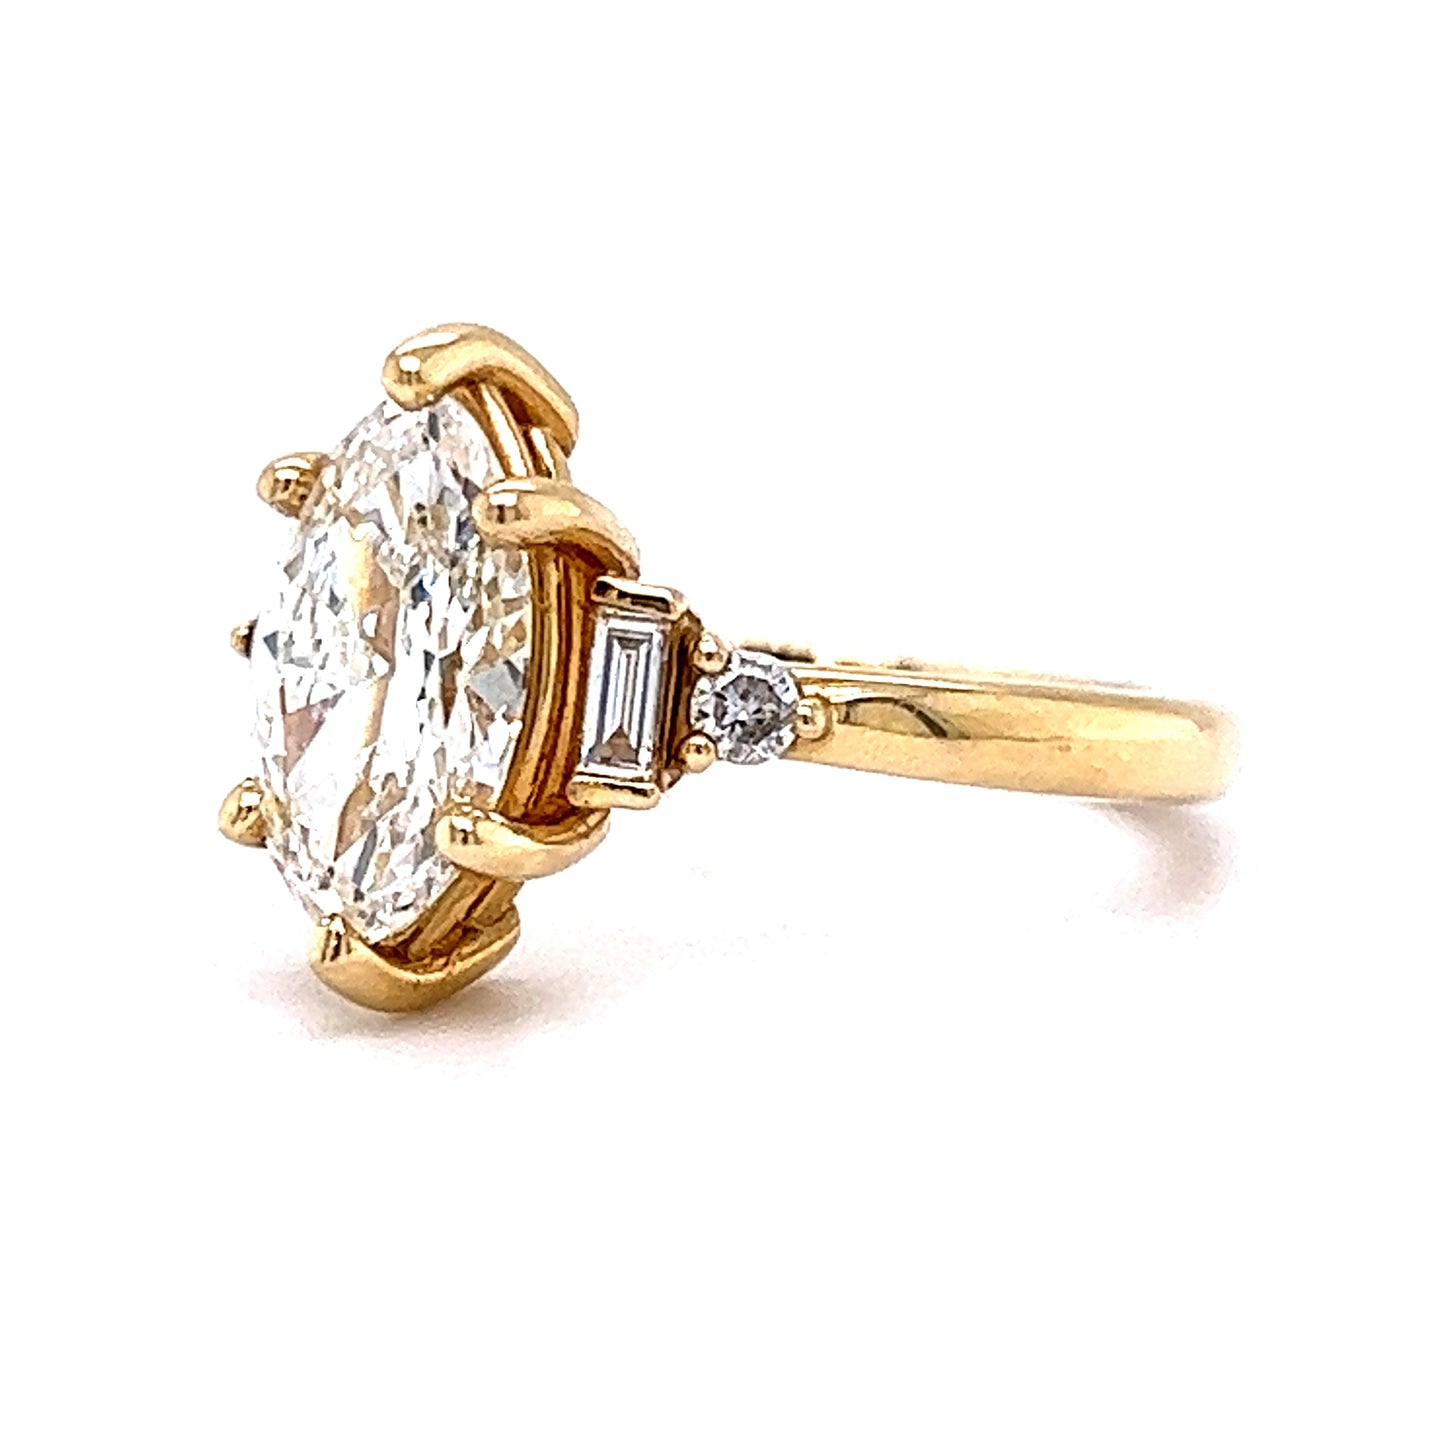 2 Carat Marquise Cut Diamond Engagement Ring in 14k